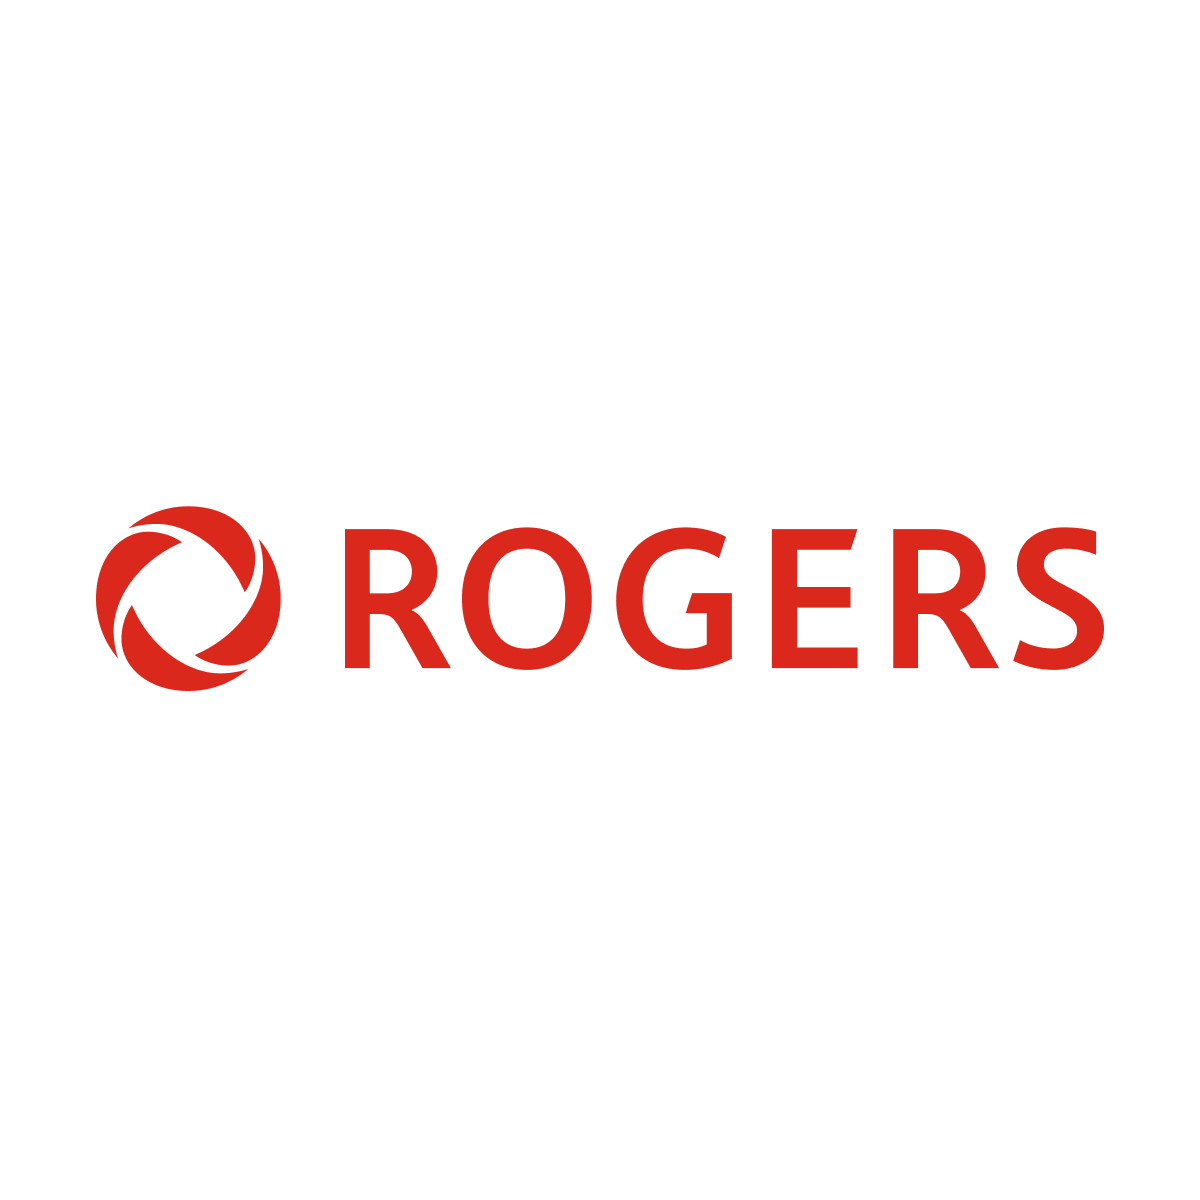 www.rogers.com